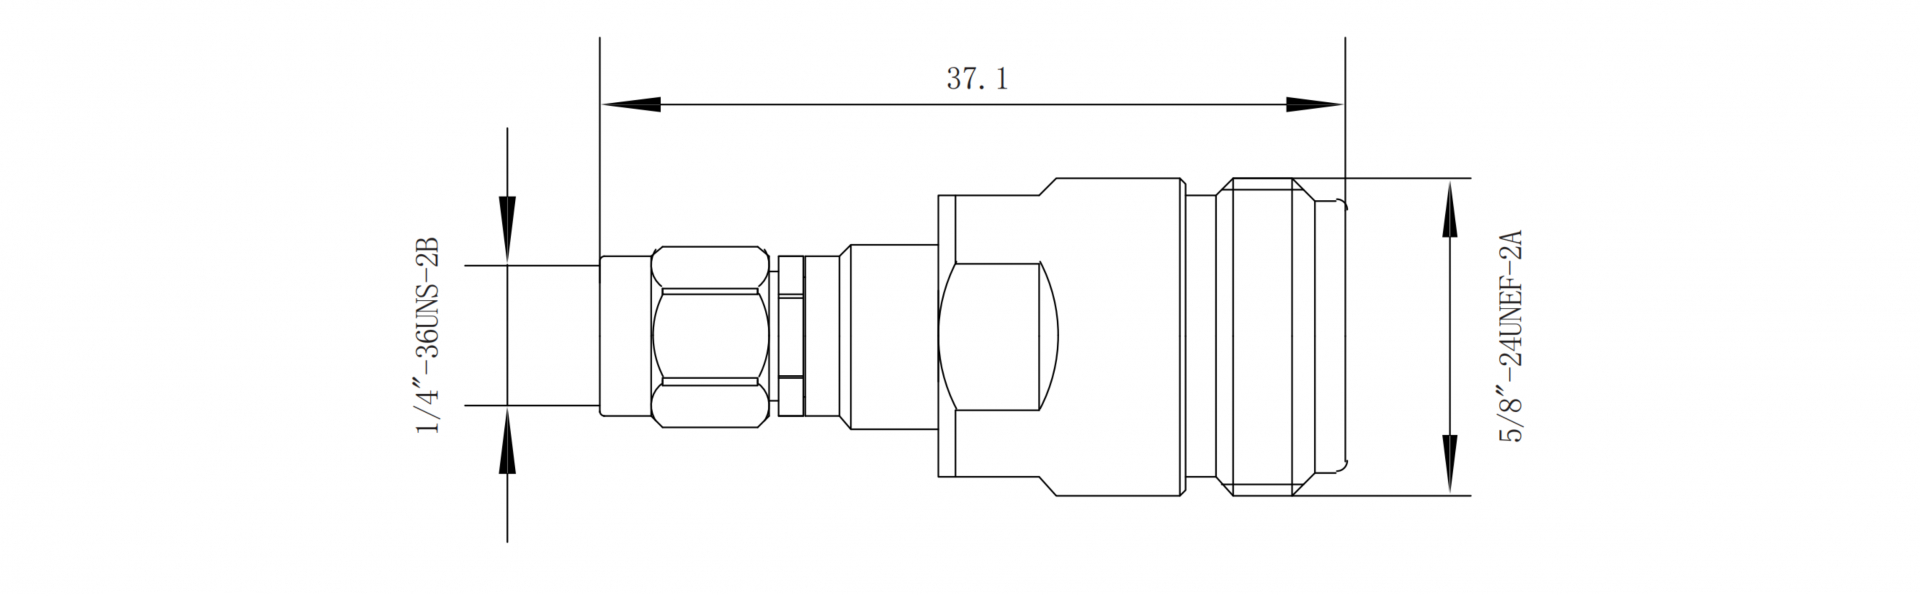 2.92 mm adapter, 2.92mm female adpter, 2.92mm rf adapter, n female